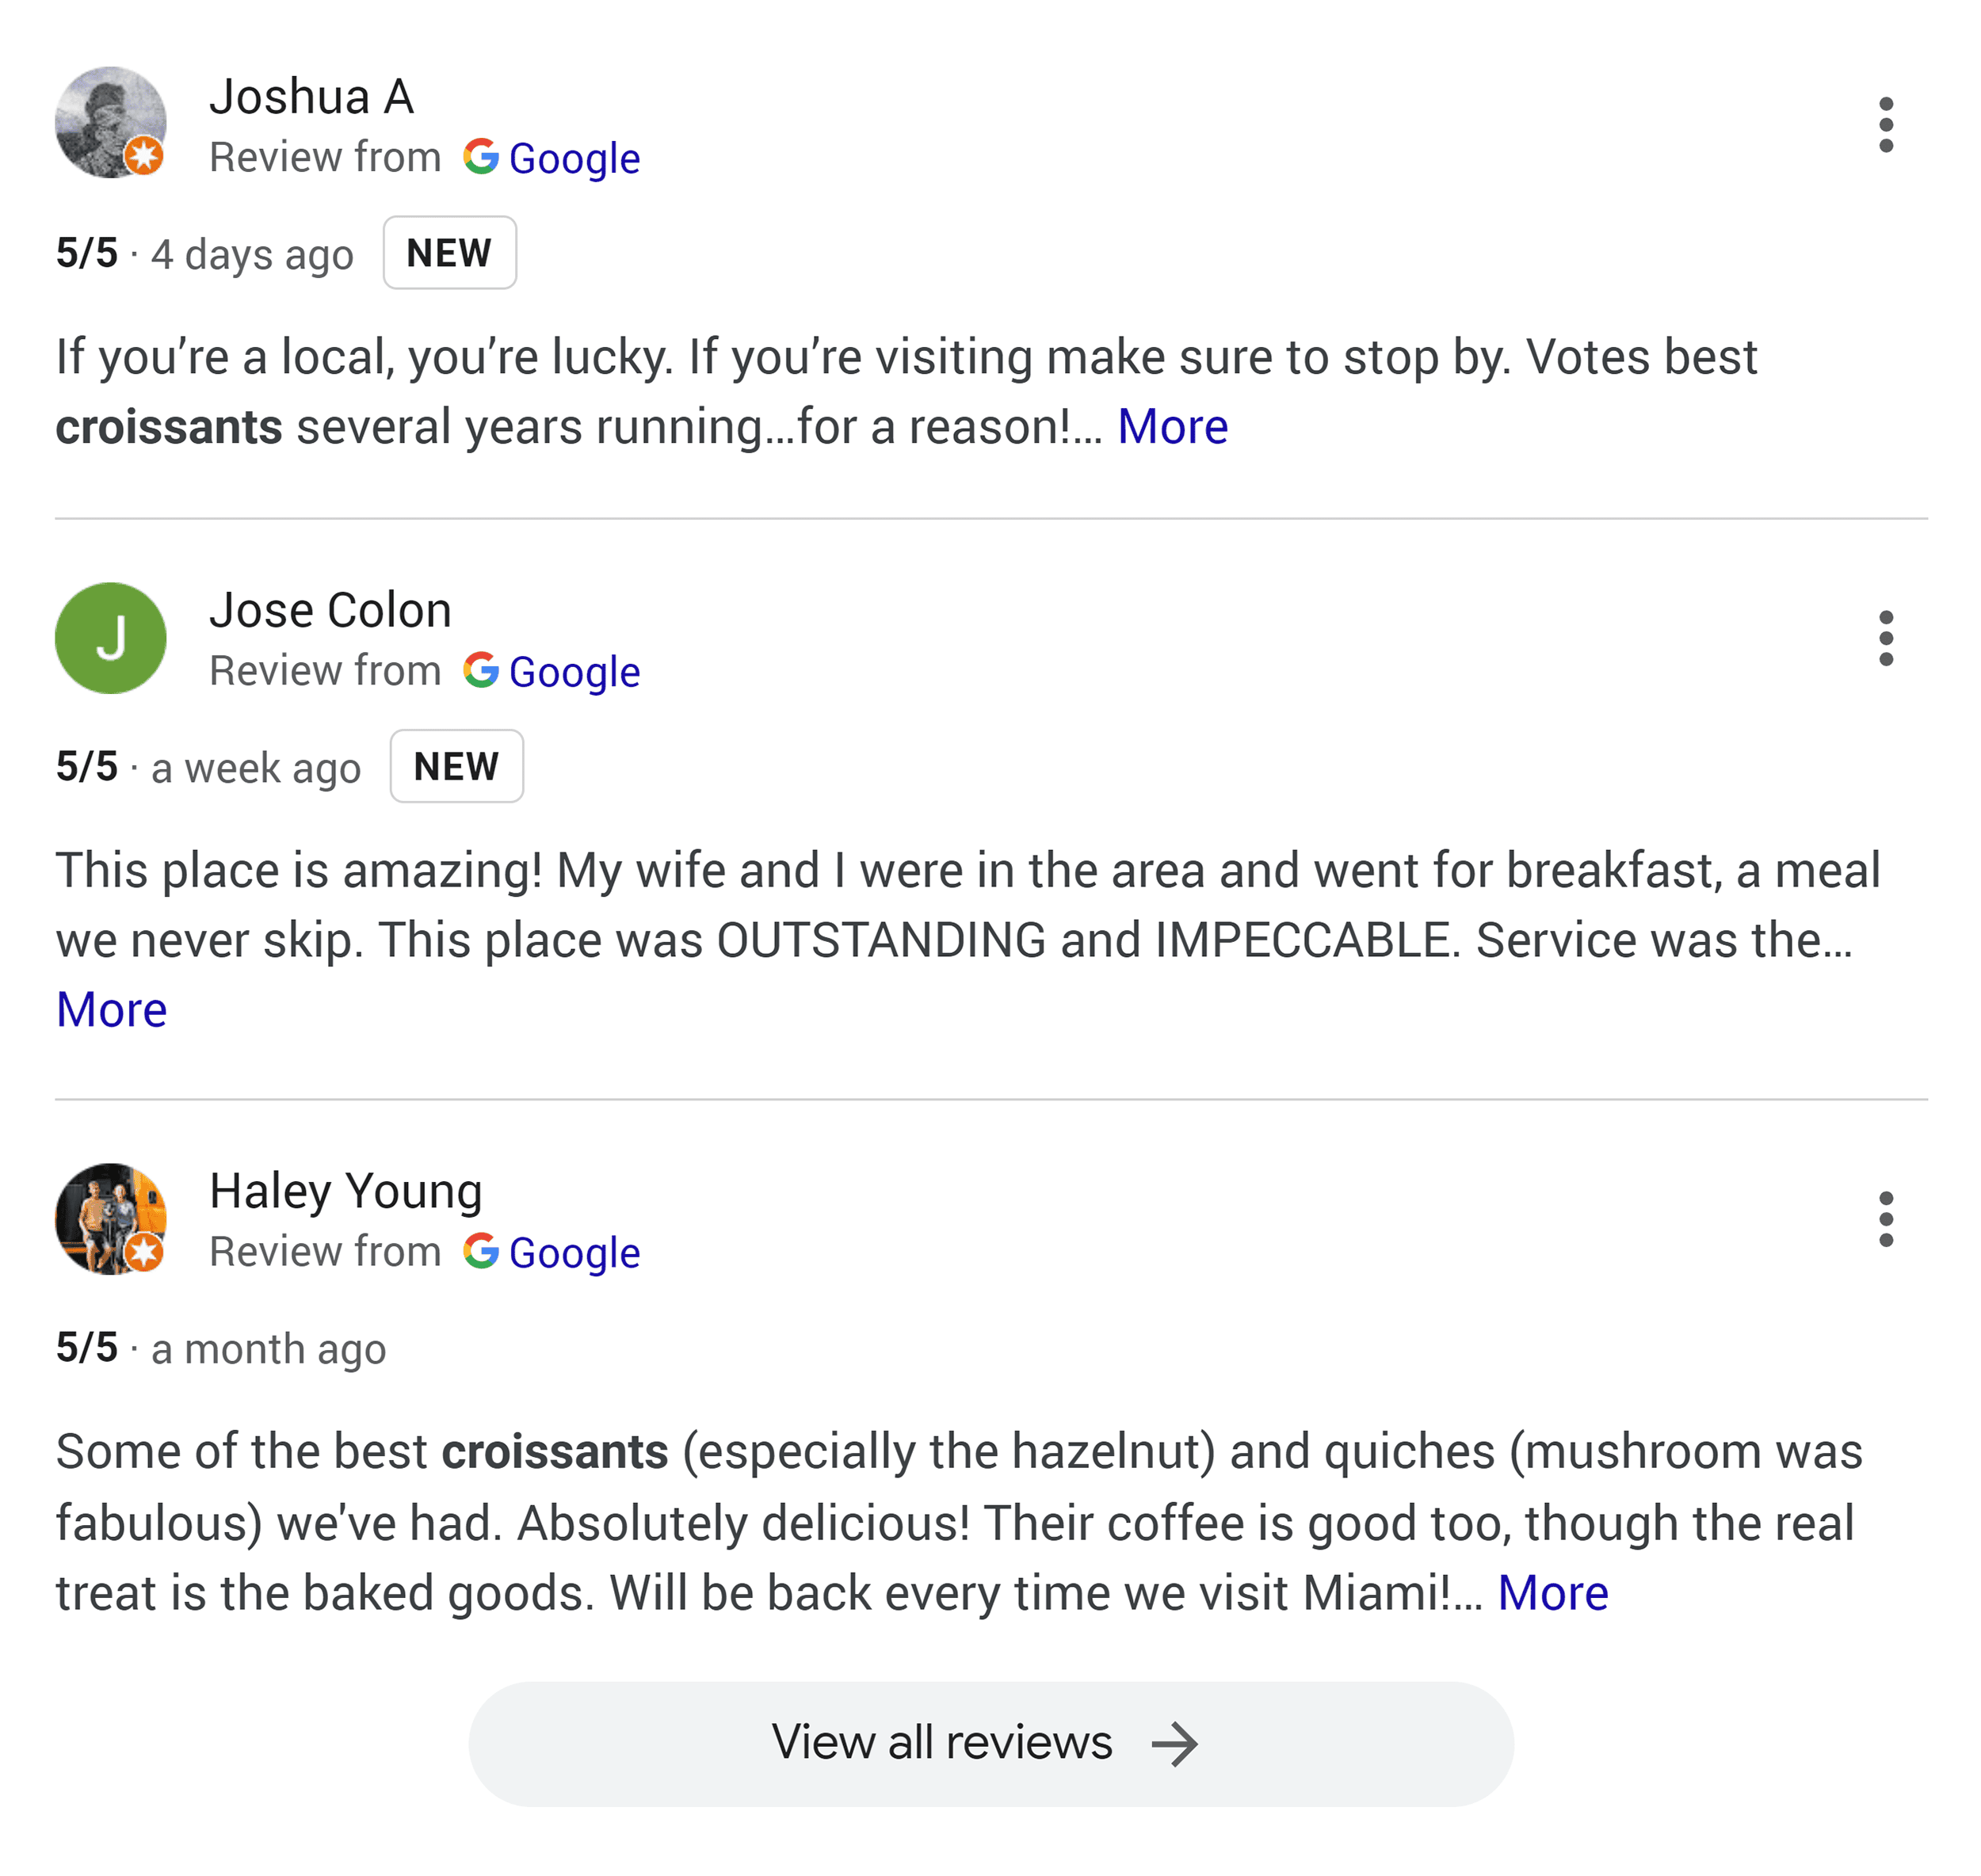 Reviews highlighting croissants